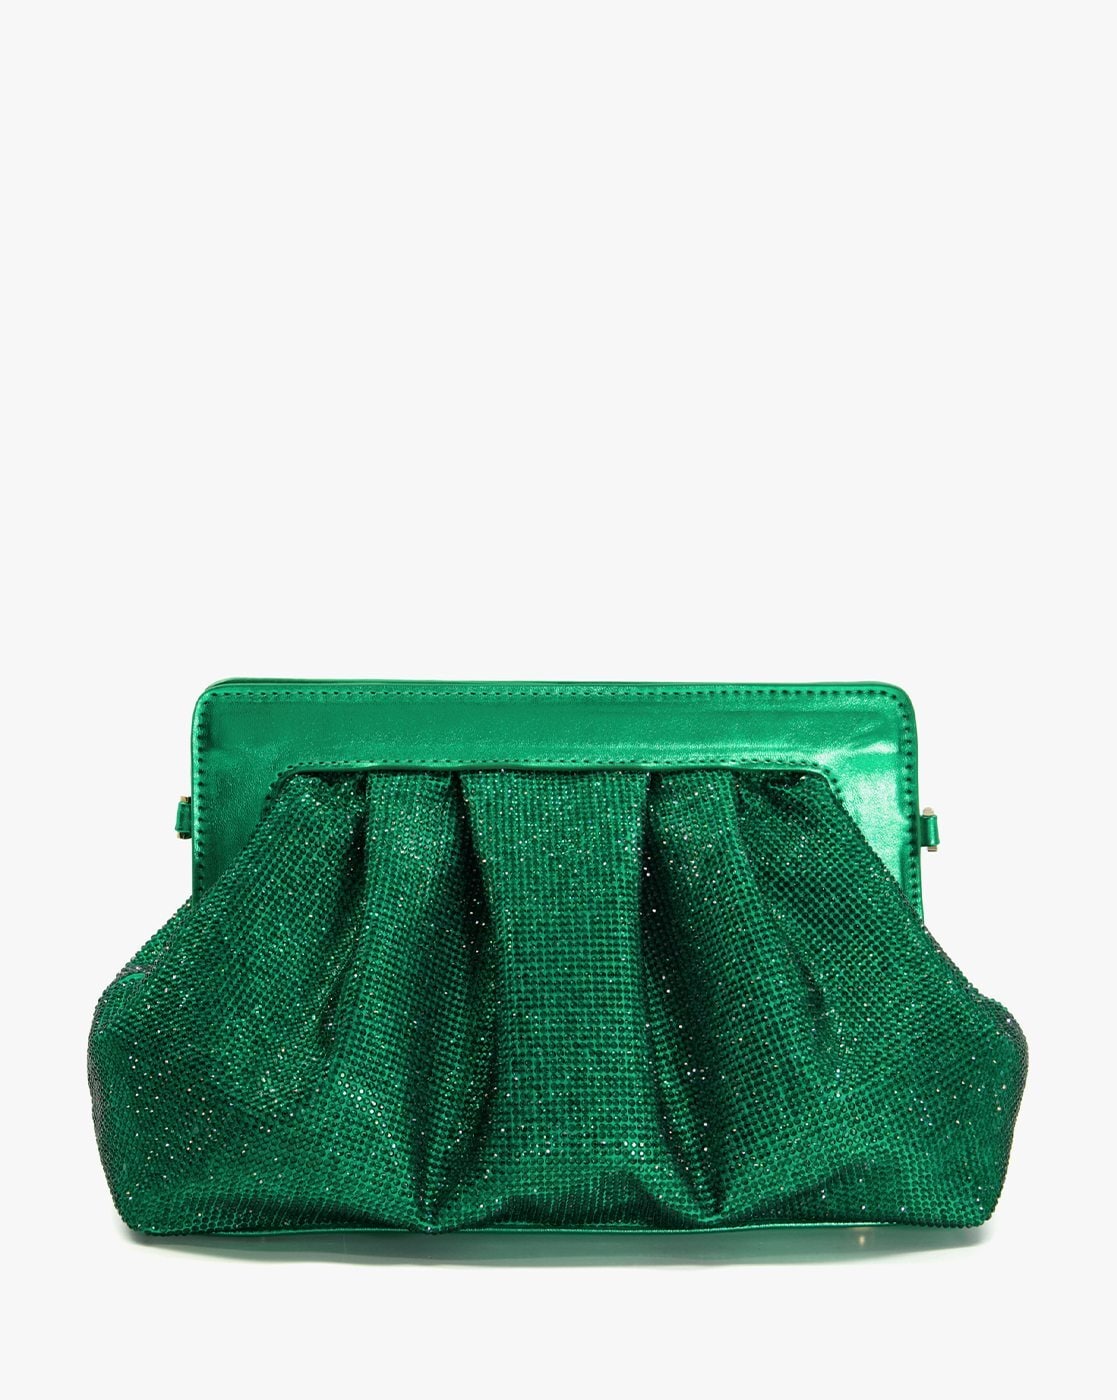 Buy GREENDIAMANTES Handbags for Women by Dune London Online  Ajiocom